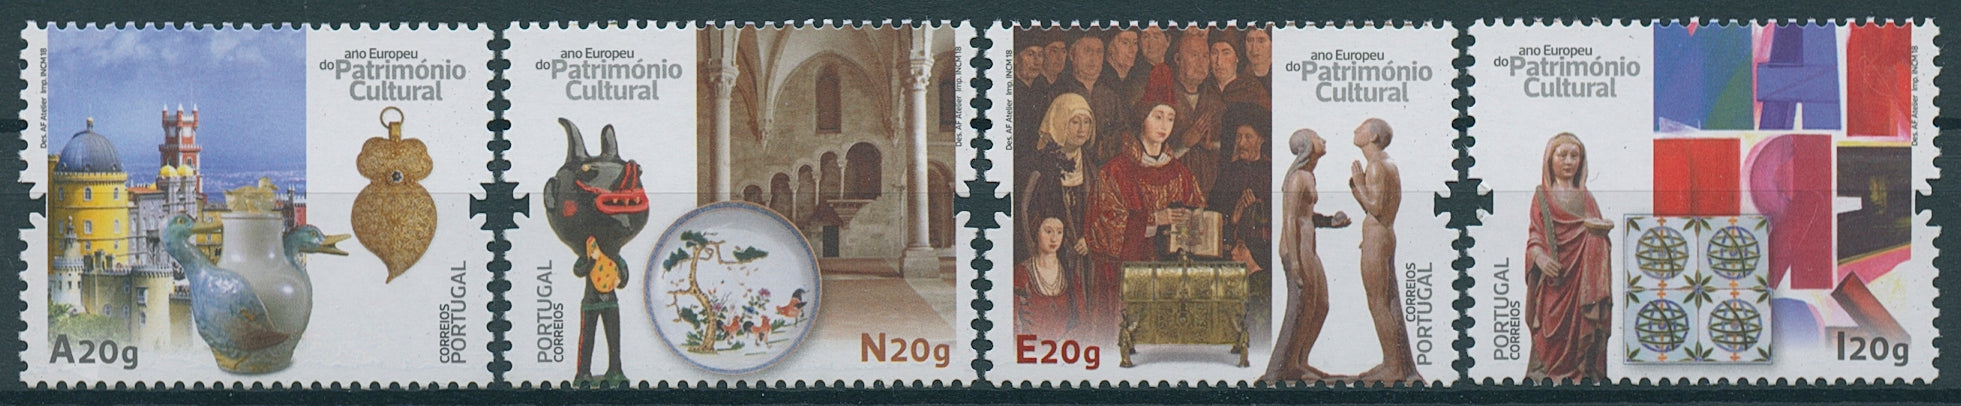 Portugal 2018 MNH European Year of Cultural Heritage 4v Set Art Cultures Stamps